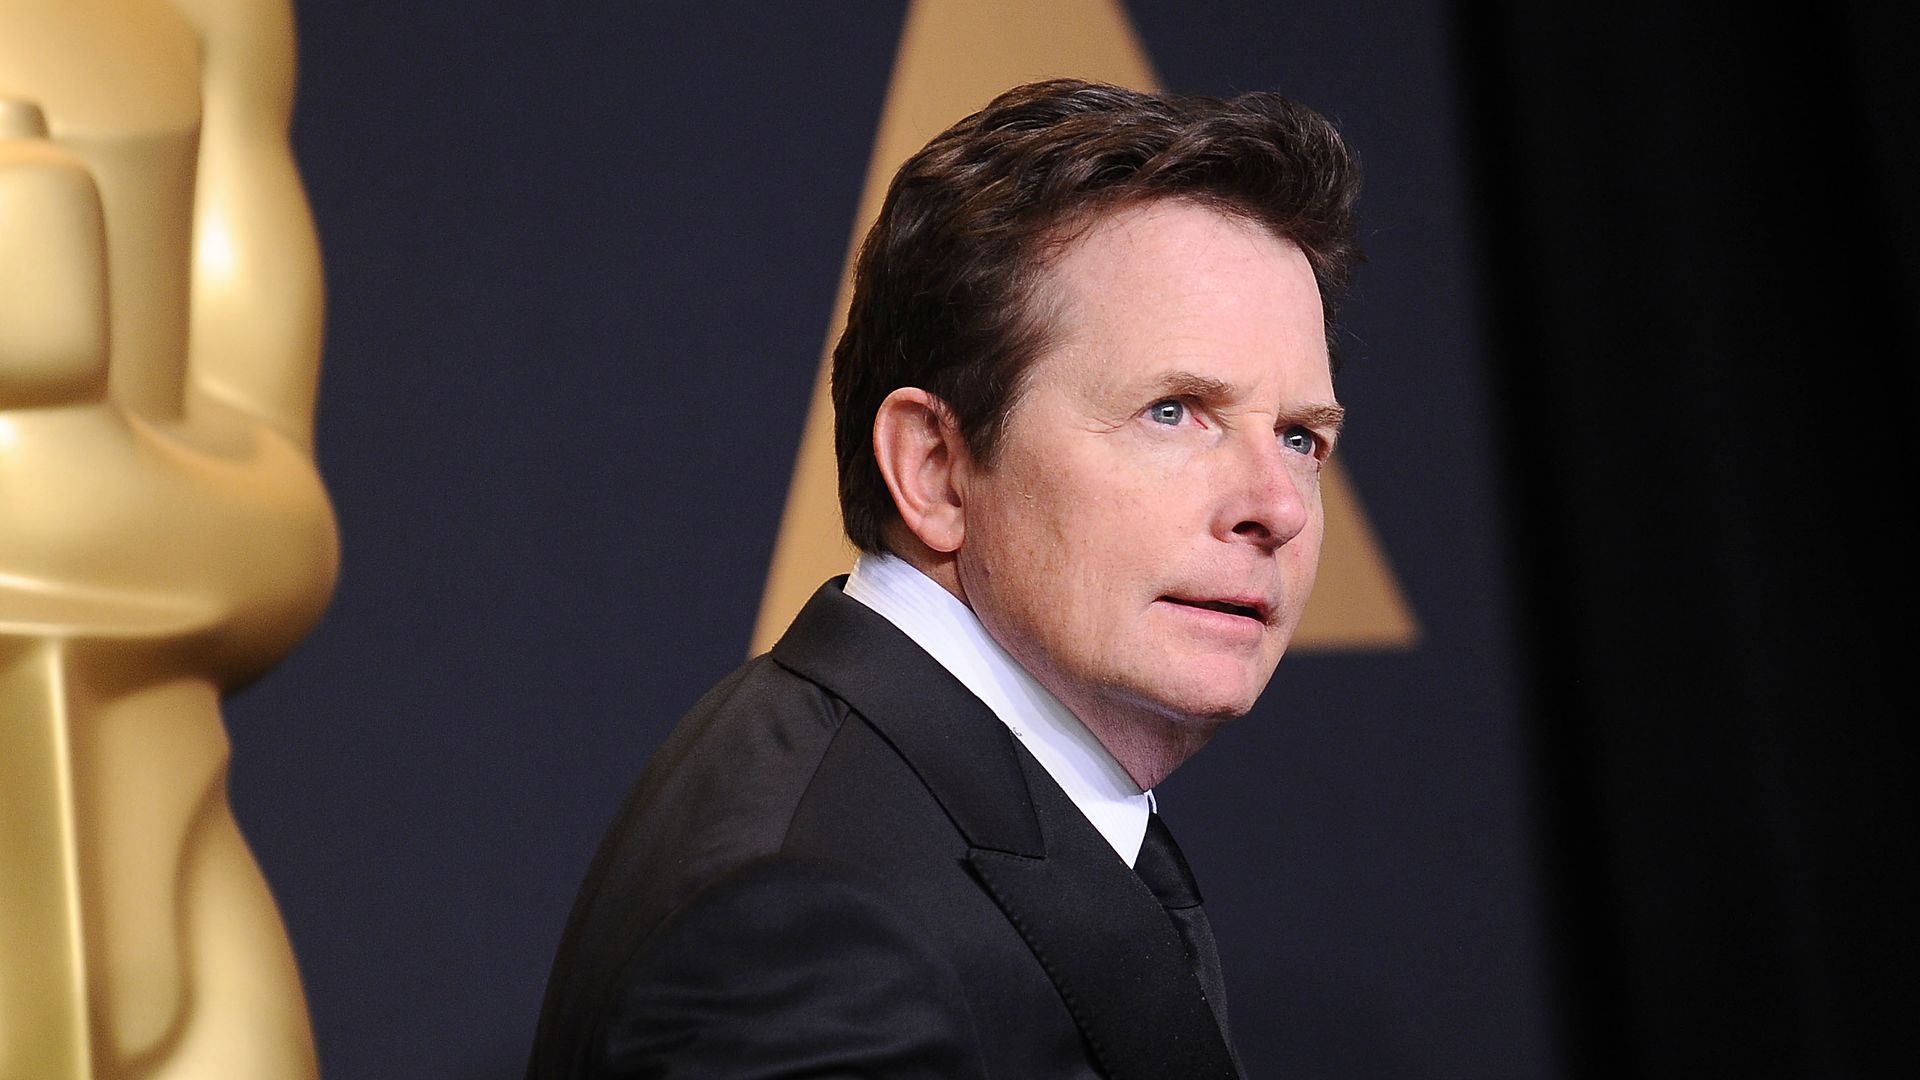 Michael J. Fox by an Oscar's statue